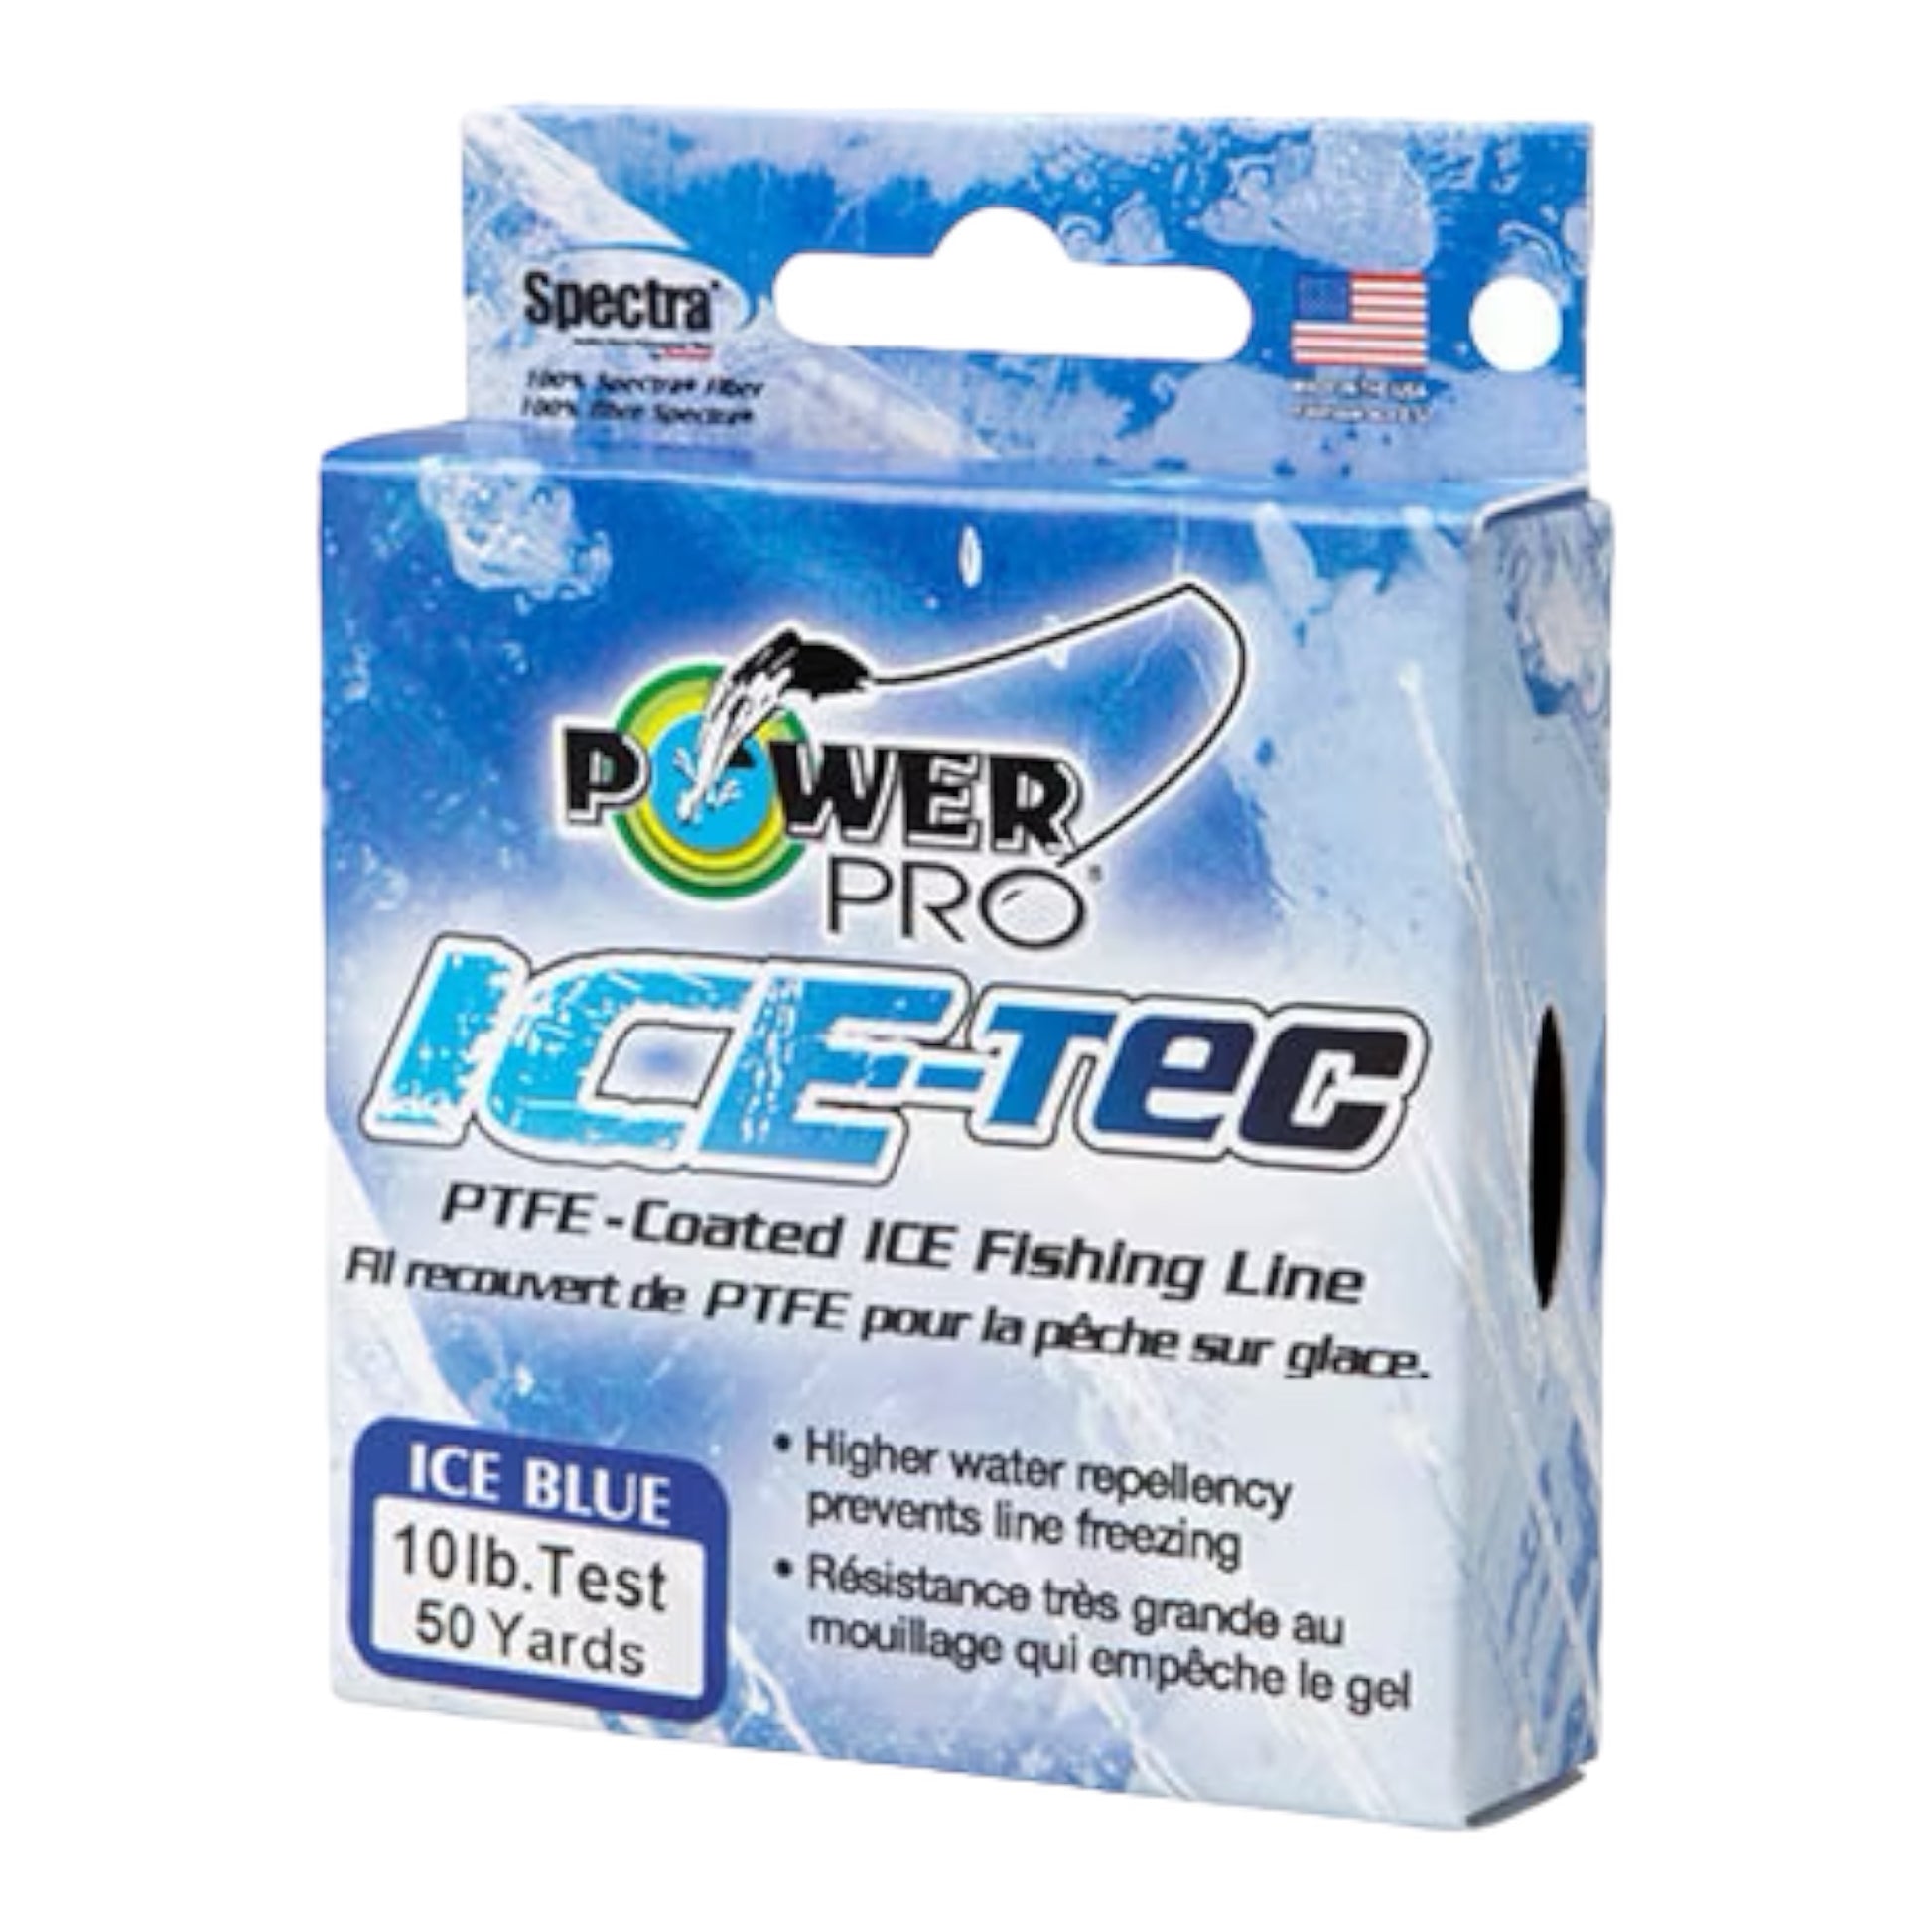 Power Pro Ice-Tec – Three Rivers Tackle